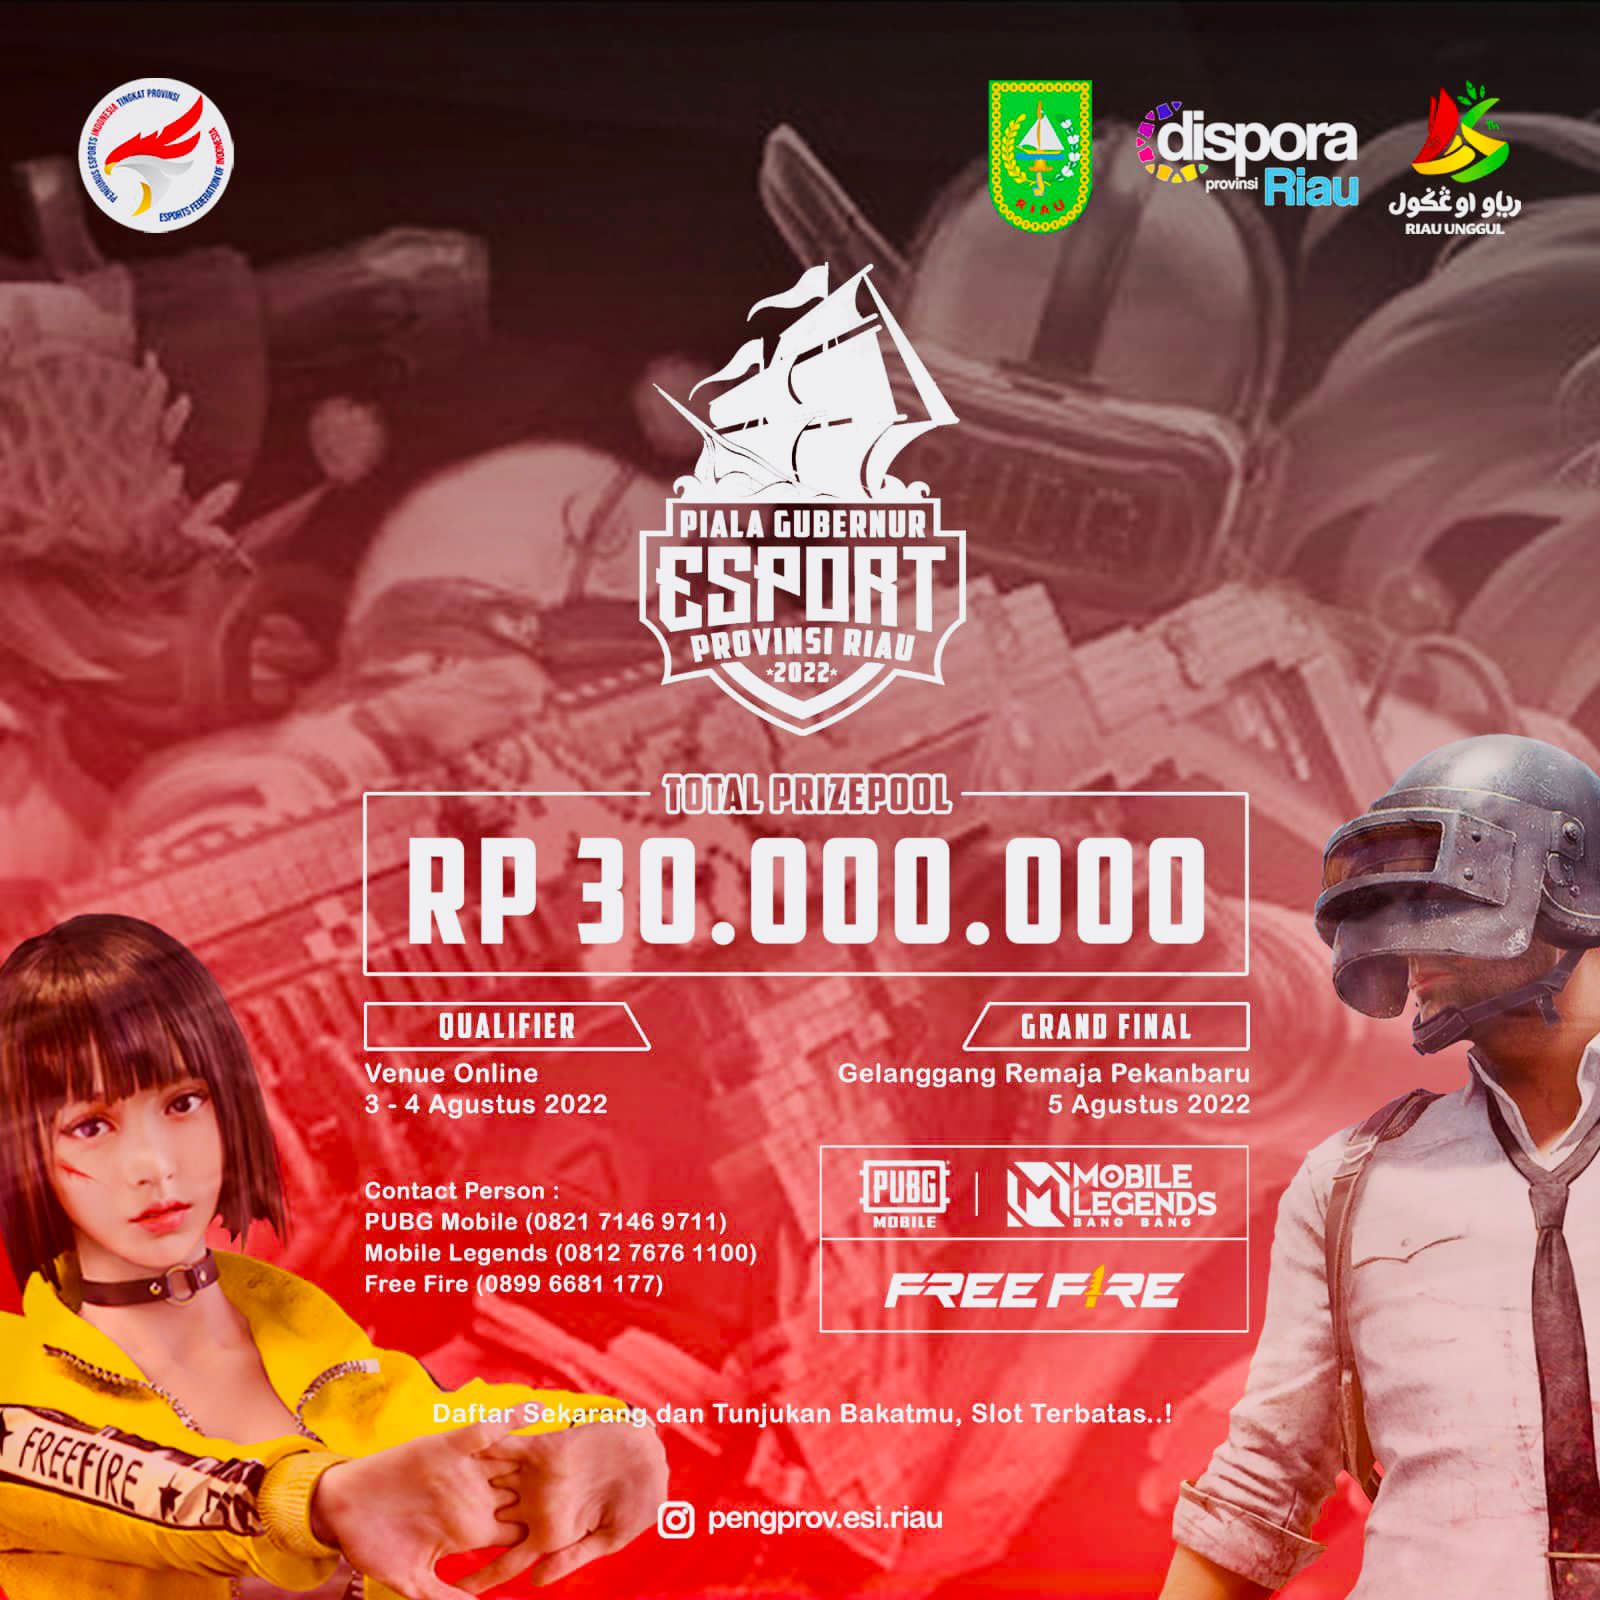 PB E-sport Riau Gelar Tiga Game,PUBG Mobile, Free Fire, dan Mobile Legend Memperebutkan Piala Gubernur Riau